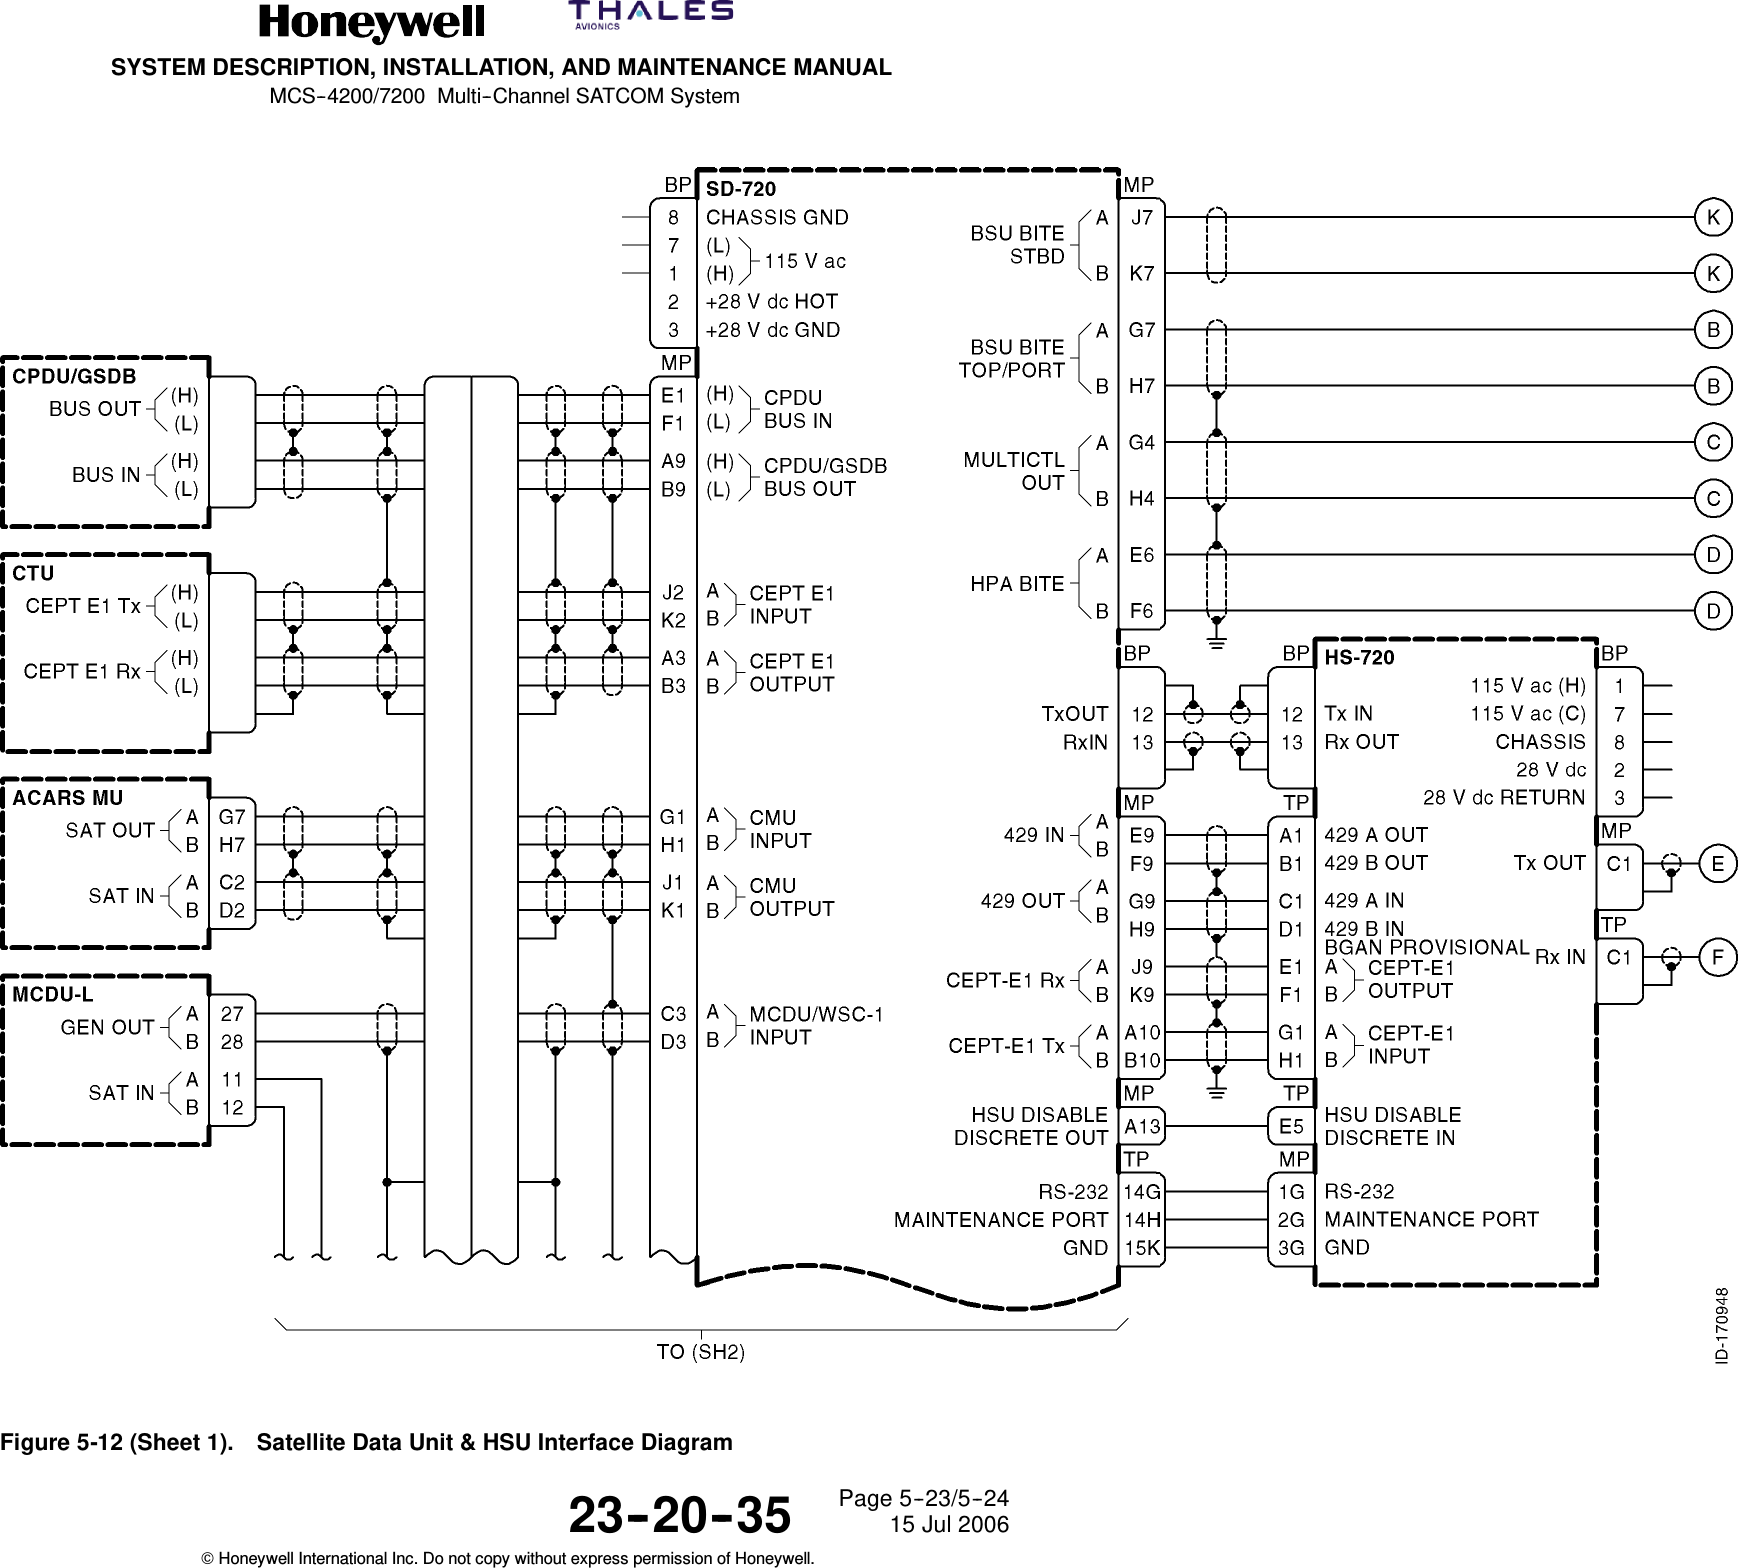 SYSTEM DESCRIPTION, INSTALLATION, AND MAINTENANCE MANUALMCS--4200/7200 Multi--Channel SATCOM System23--20--35 15 Jul 2006Honeywell International Inc. Do not copy without express permission of Honeywell.Page 5--23/5--24Figure 5-12 (Sheet 1). Satellite Data Unit &amp; HSU Interface Diagram